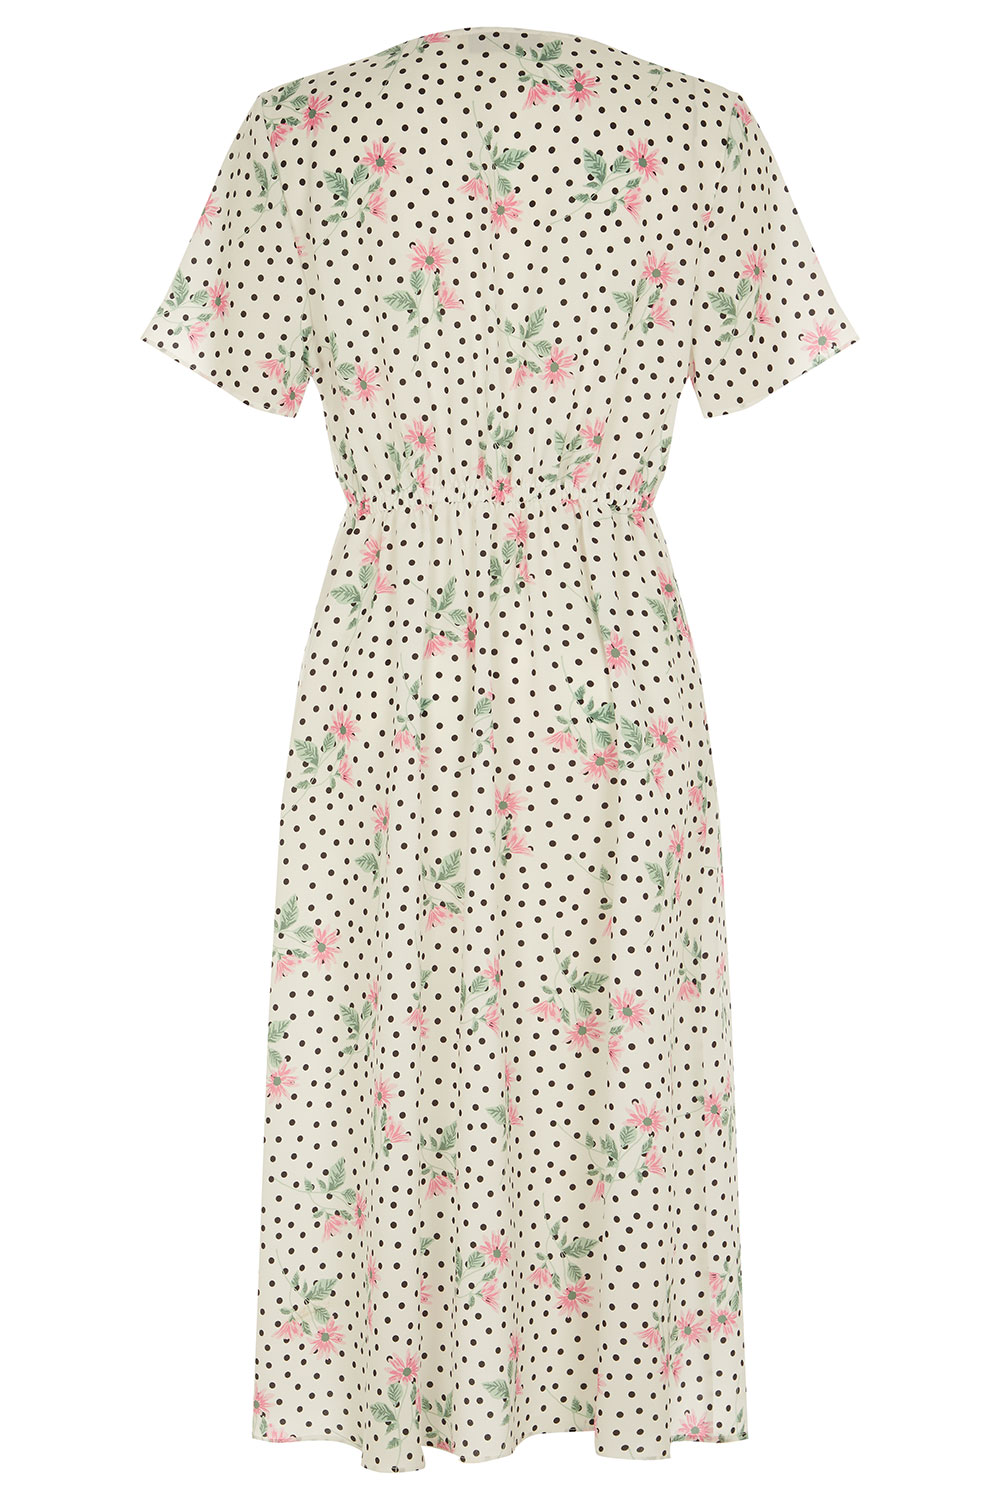 Daisy Spot Printed Tea Dress